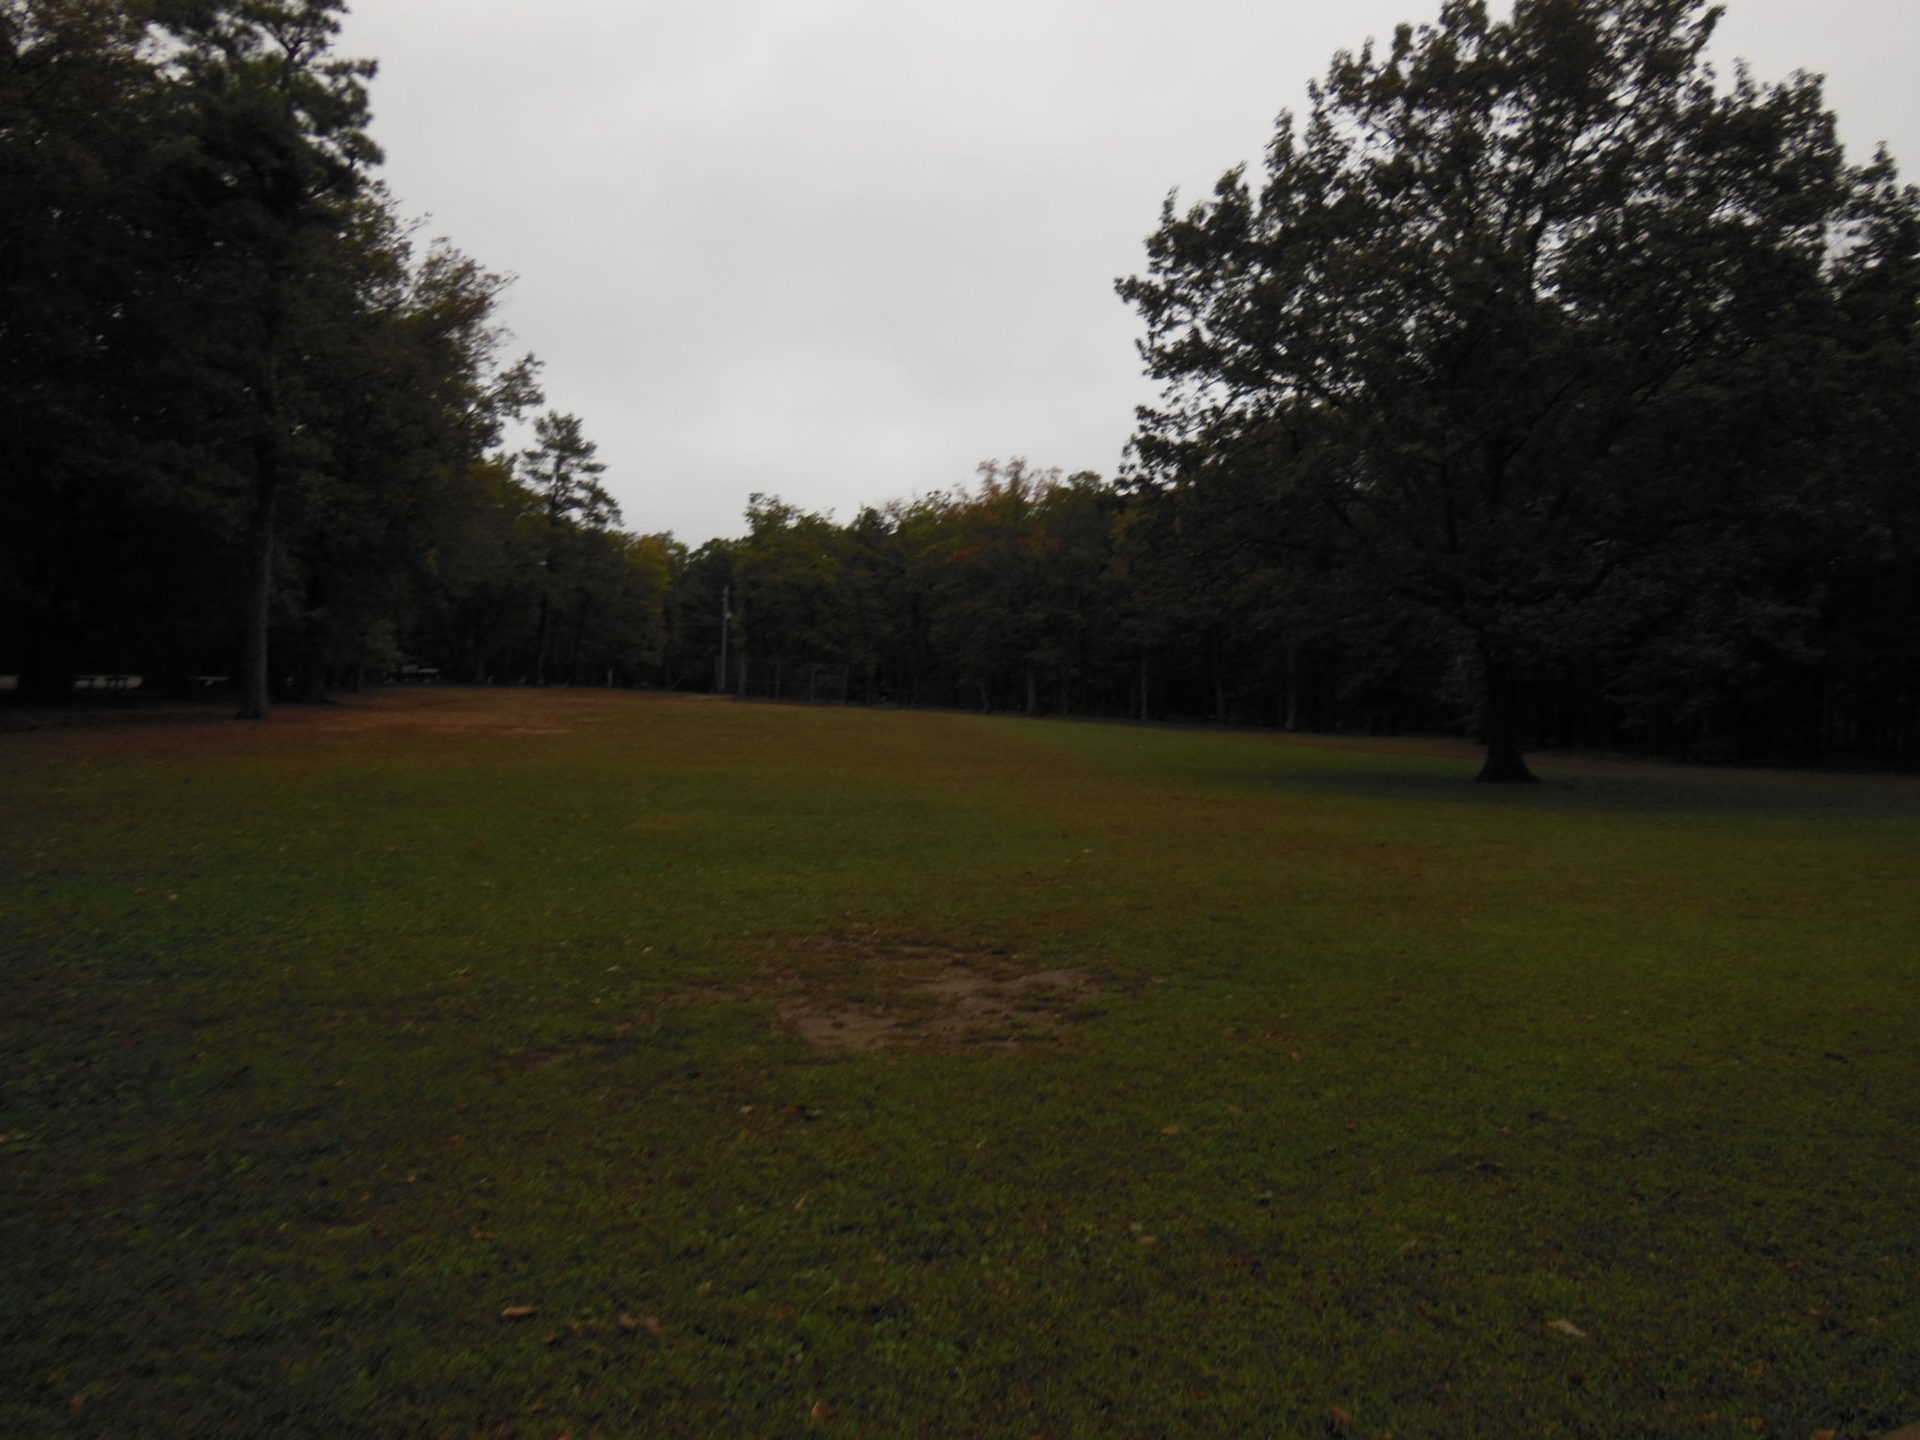 Monte Sano State Park - Field to Run